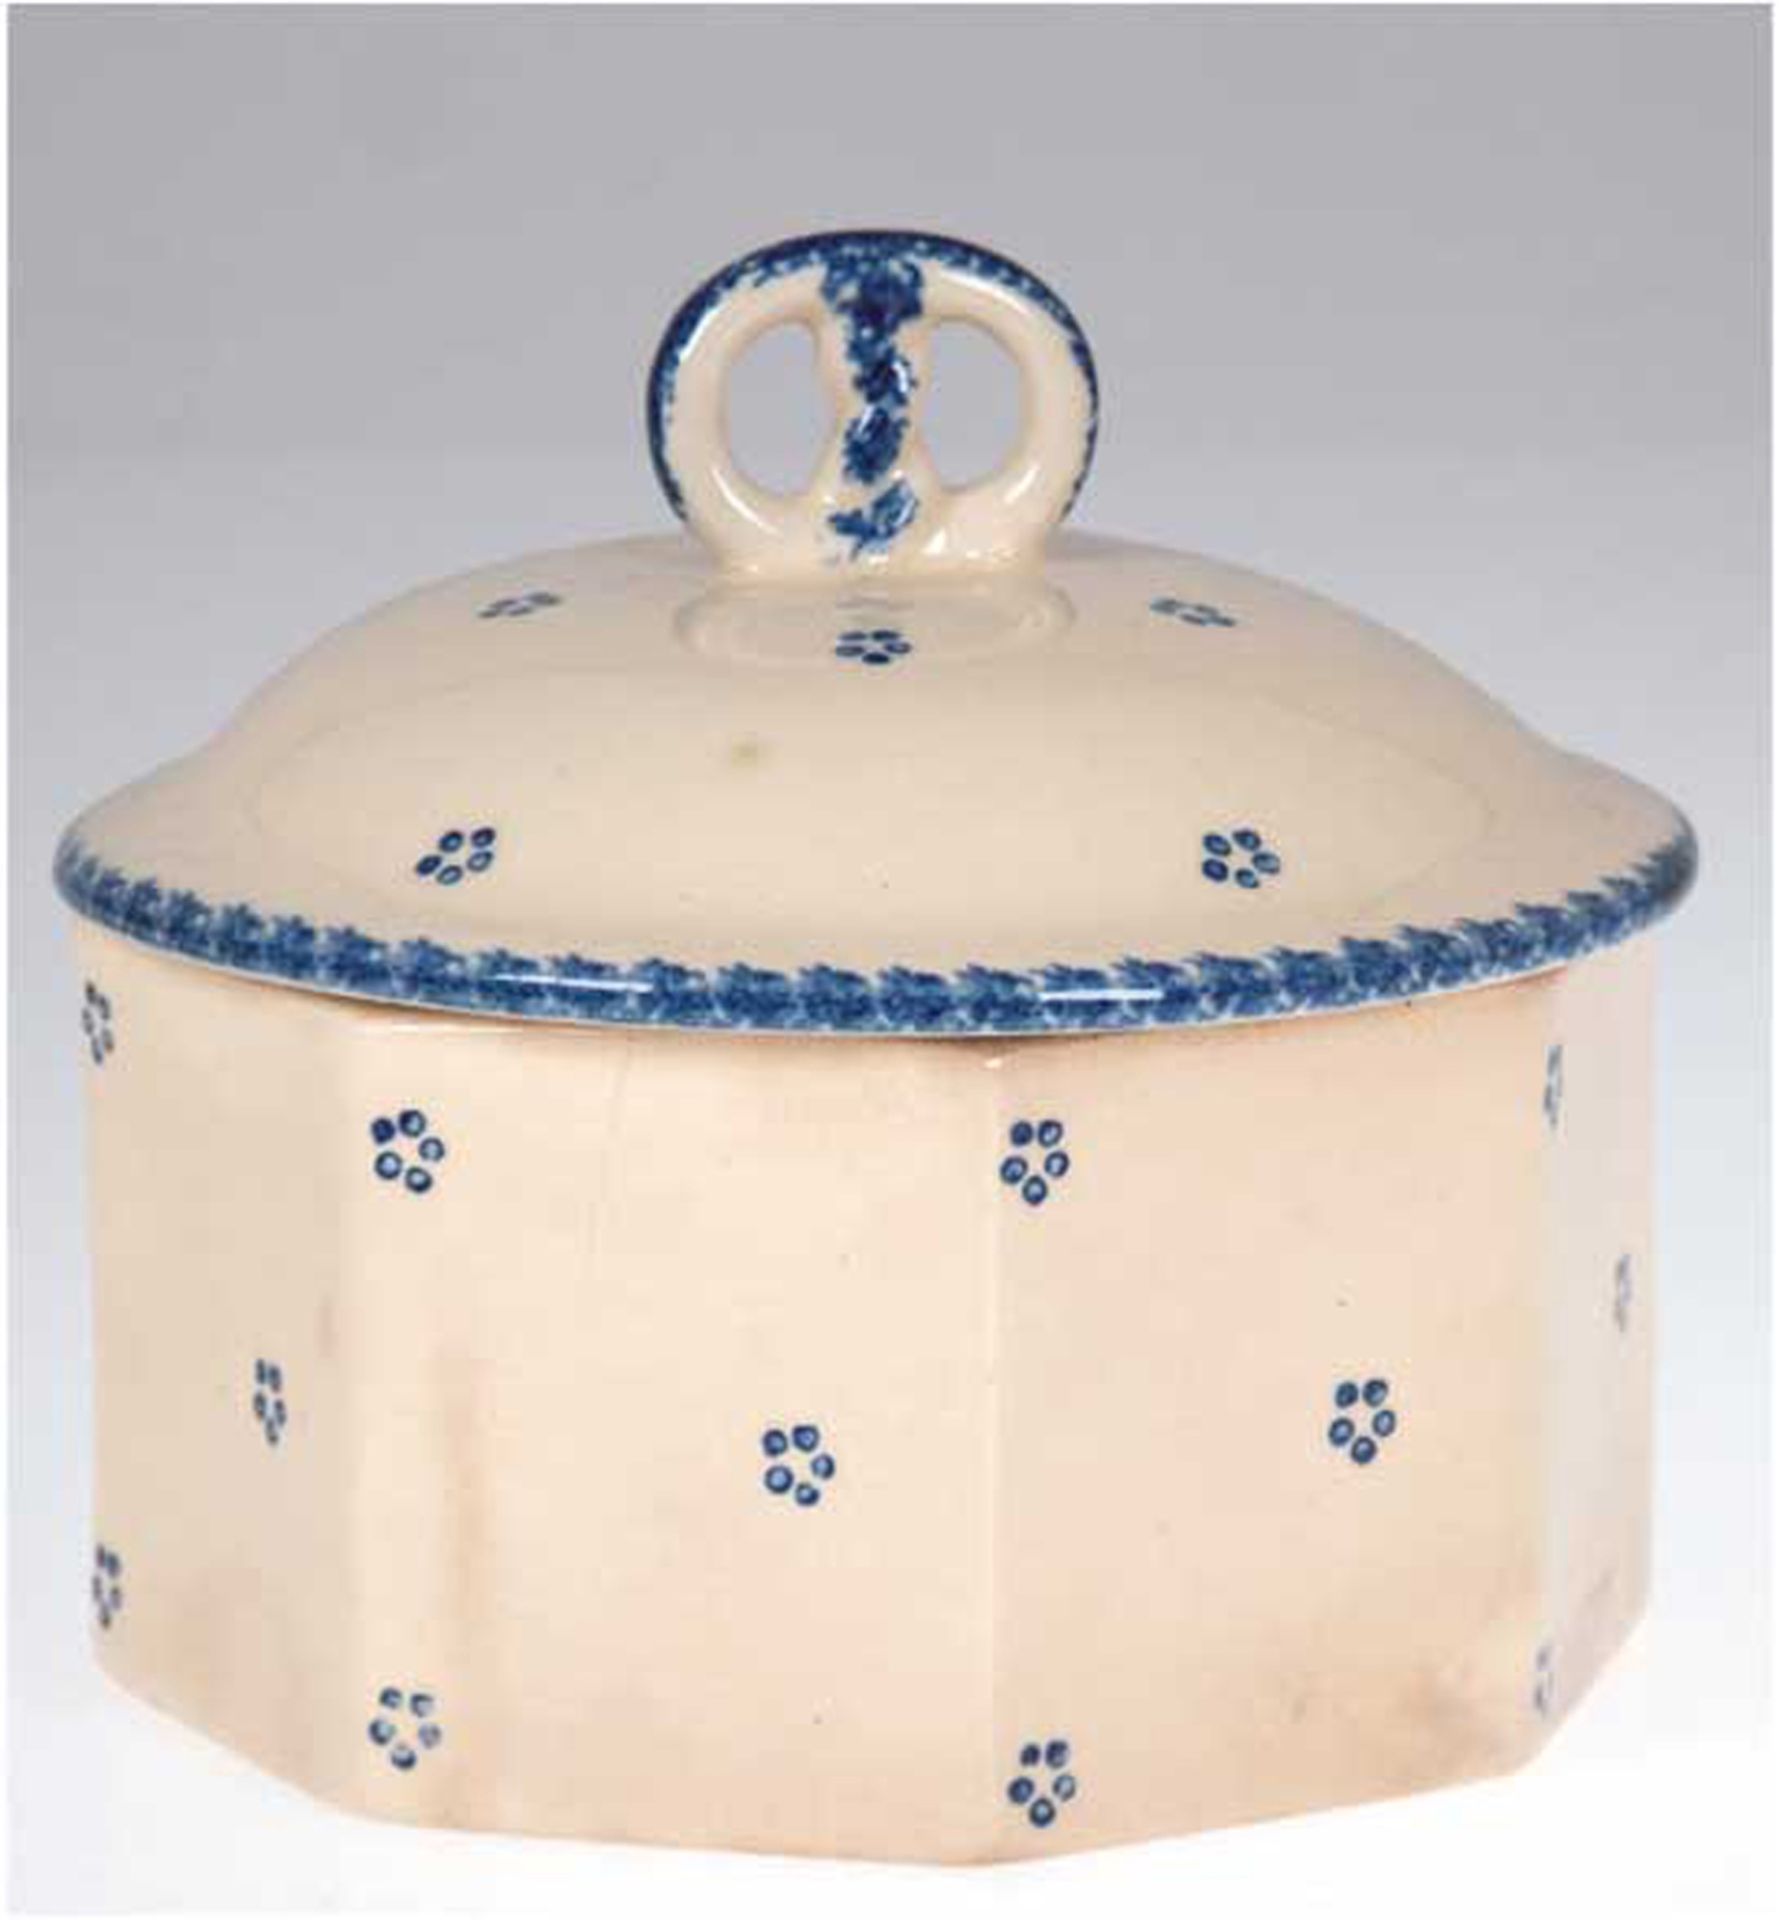 Keksdose, Bunzlau, Keramik, 8-eckige Form, Haarriß, Deckel mit Brezel als Deckelbekrönung, Gebrauch